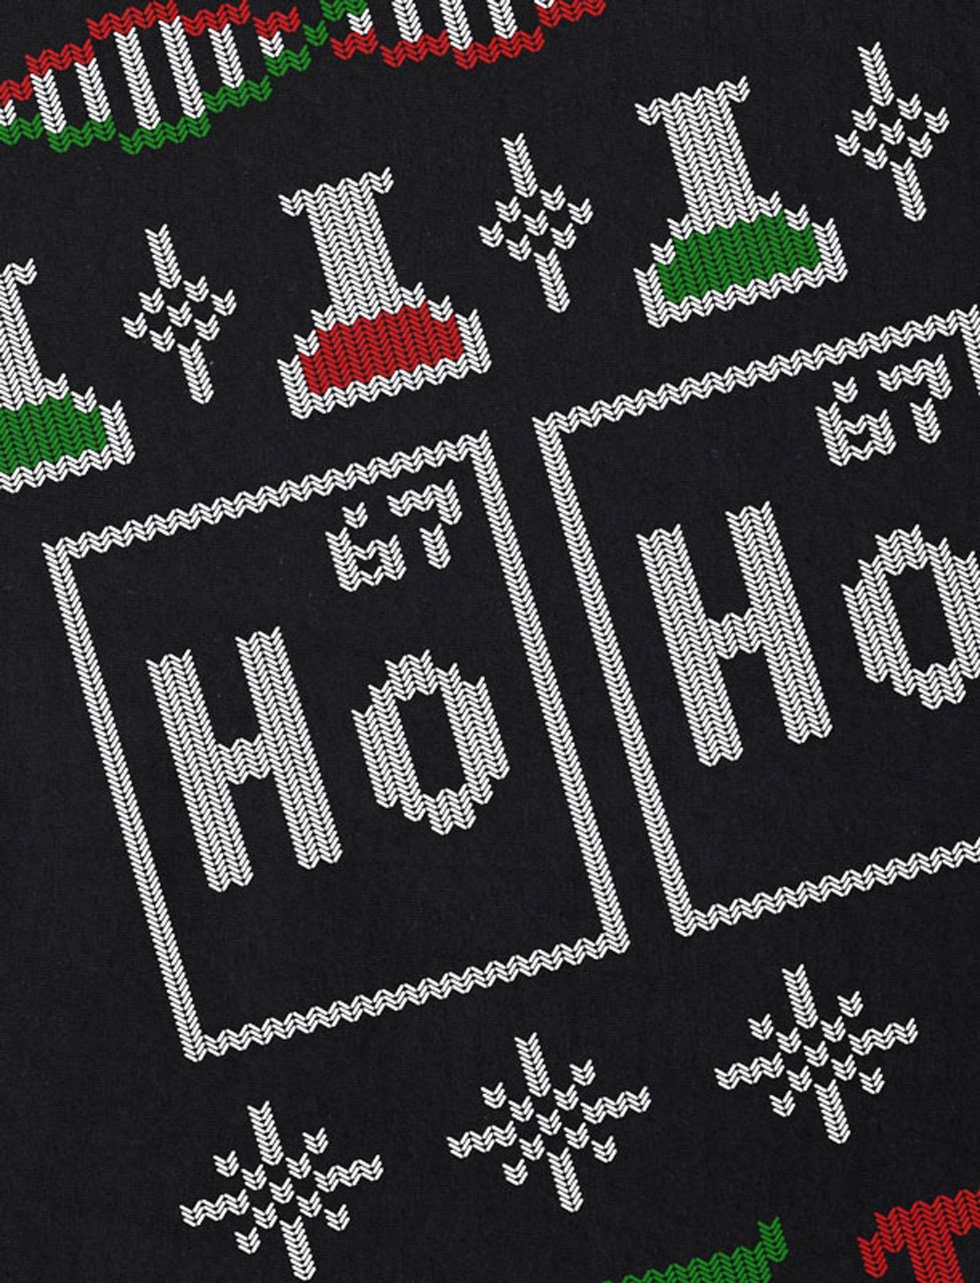 chemie Sweater pulli Ho Print-Shirt weihnachten Herren Holmium schwarz x-mas Ugly Ho style3 T-Shirt